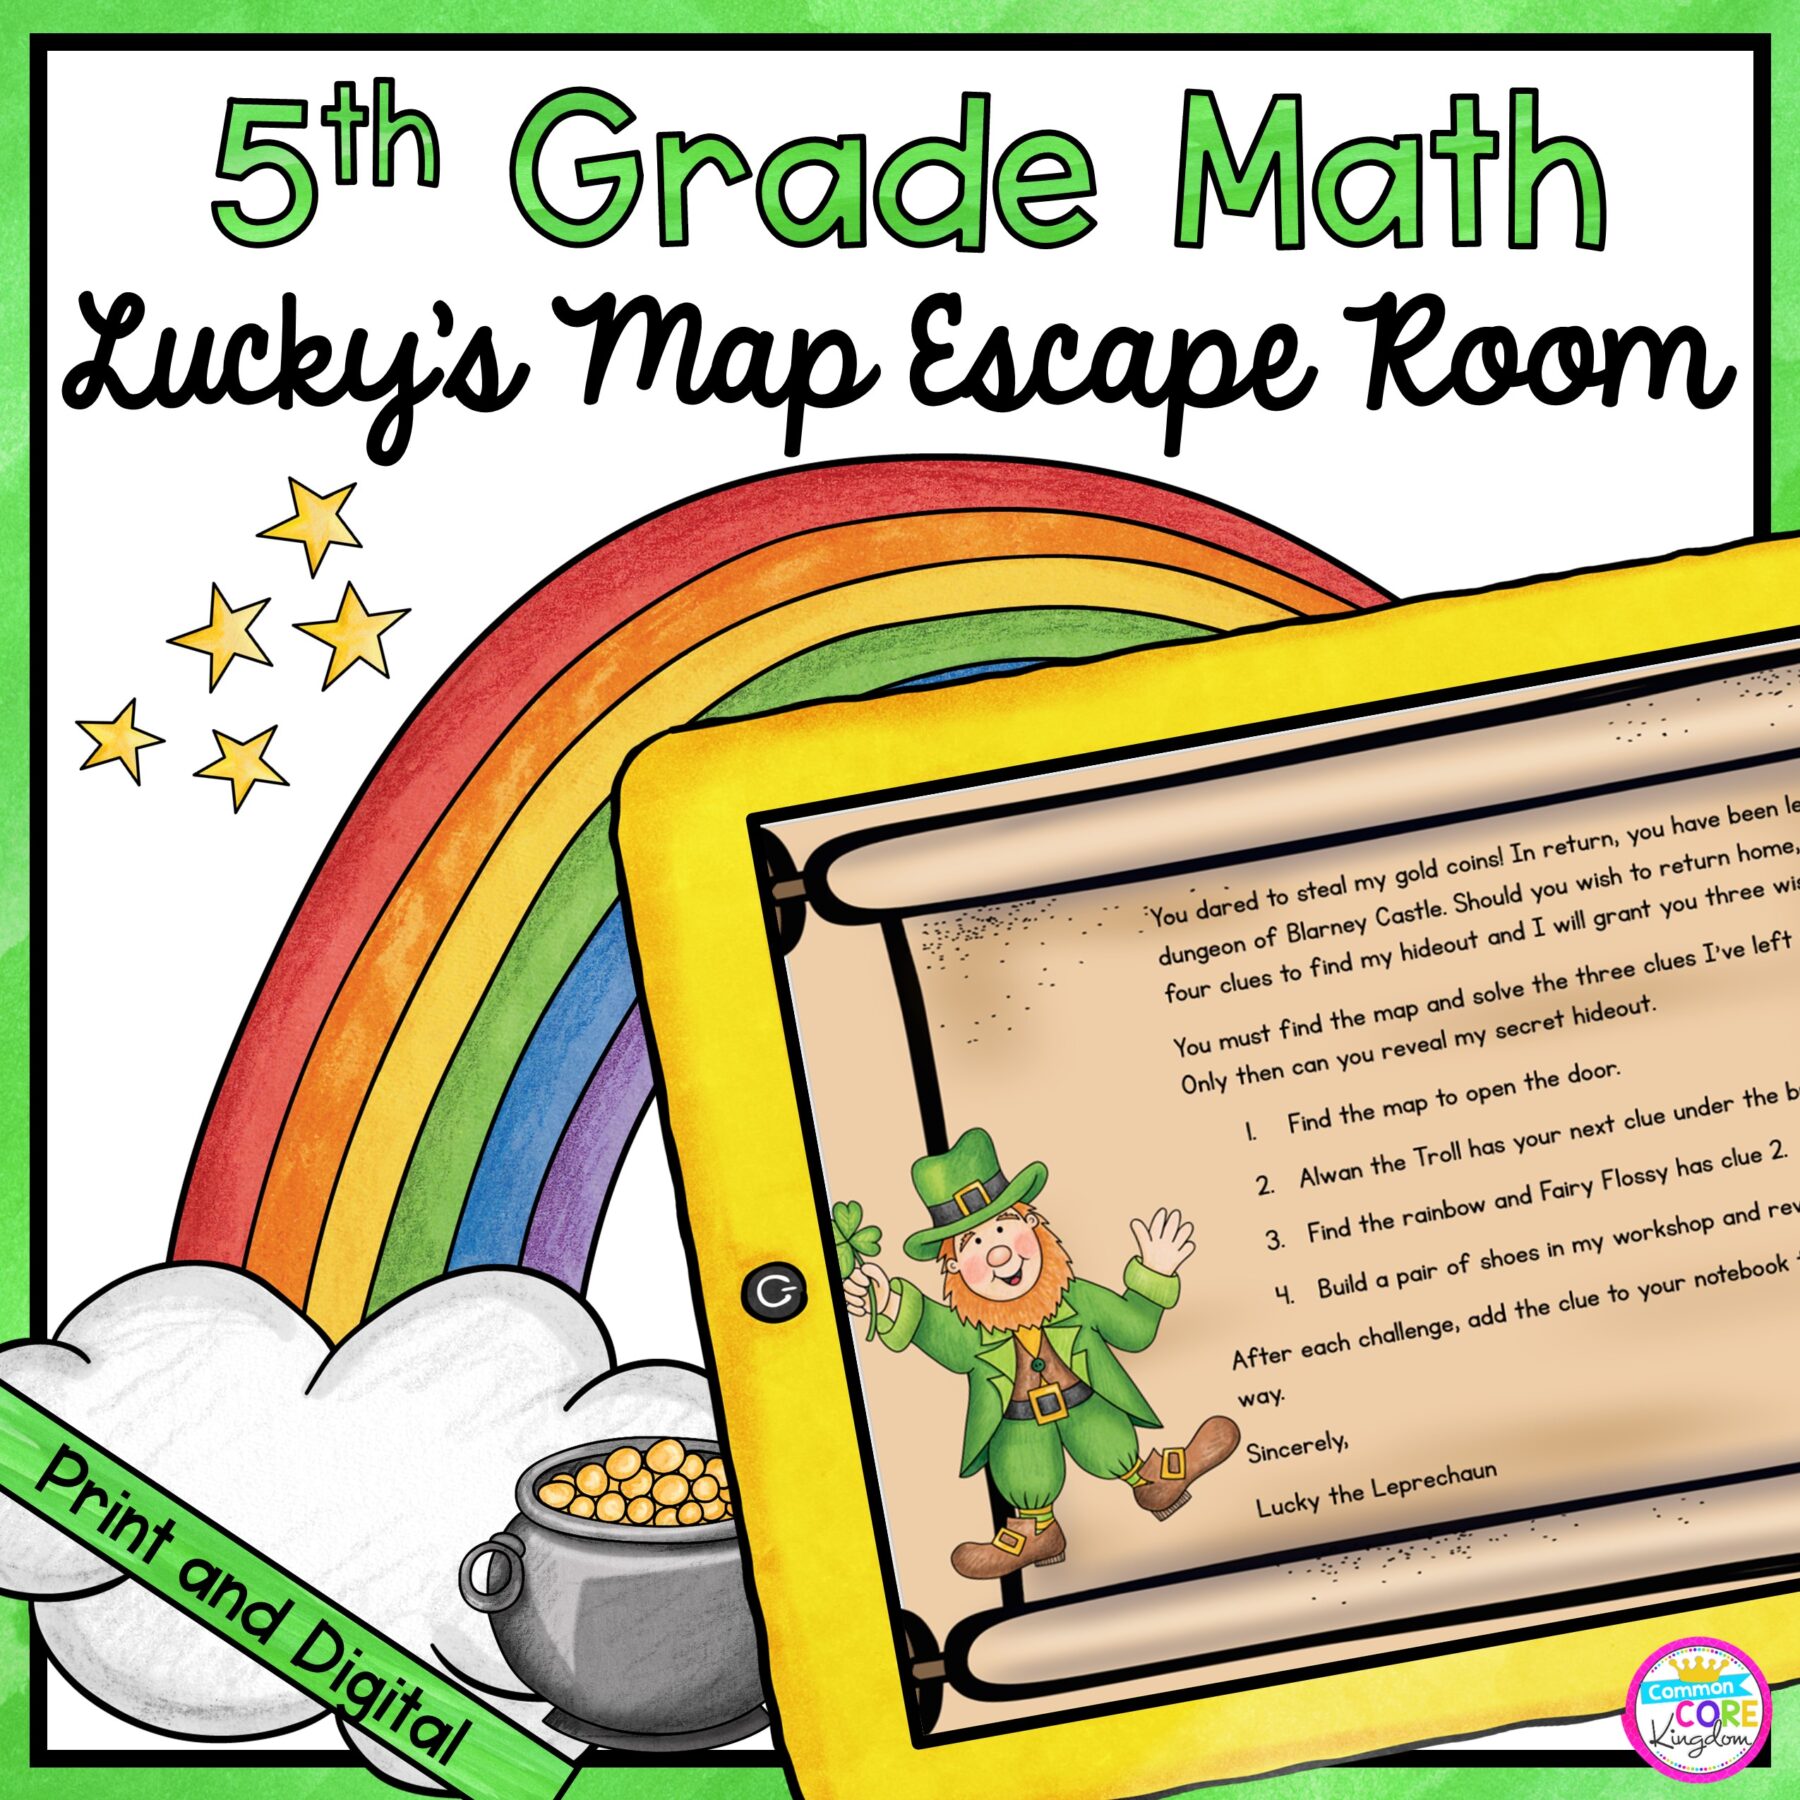 5th Grade Math Escape Room Lucky's Map